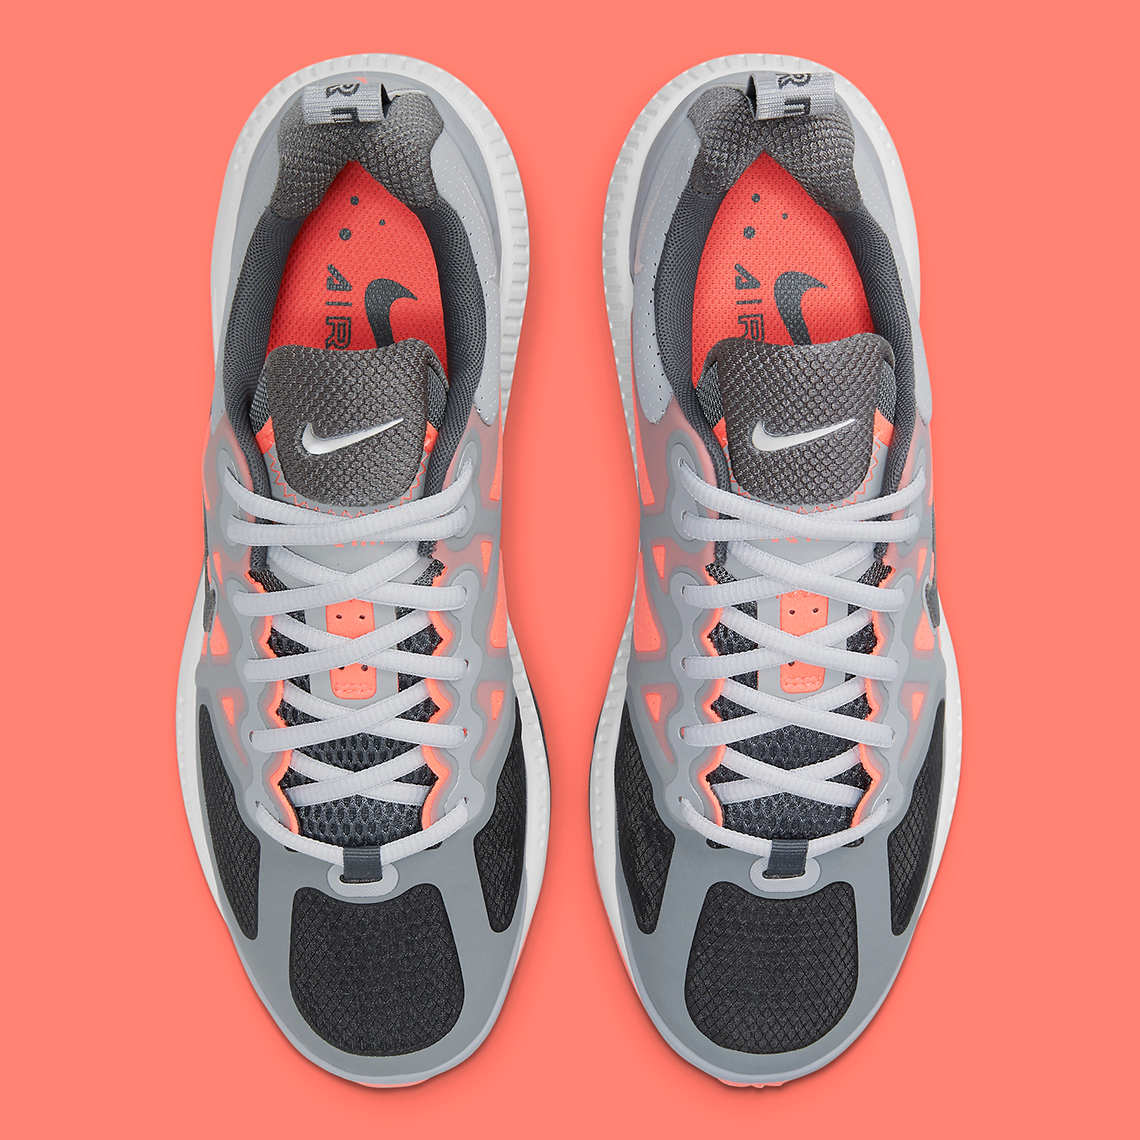 Nike nike shox grey suede pants shoes clearance Bright Mango Cw1648 004 8